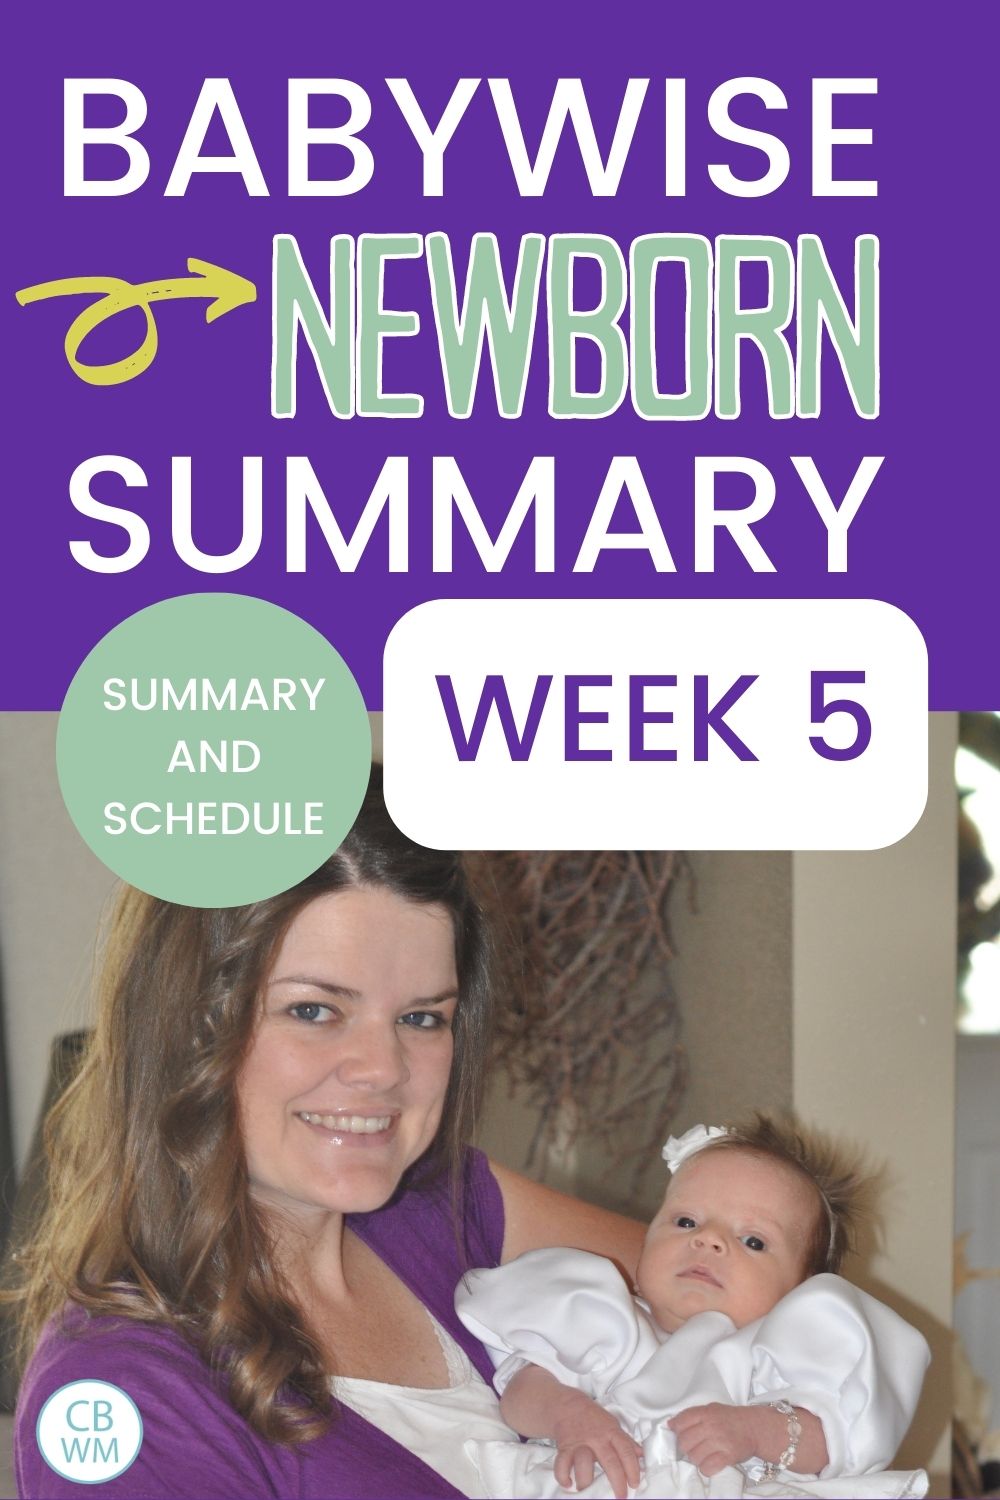 Babywise newborn summary week 5 pinnable image